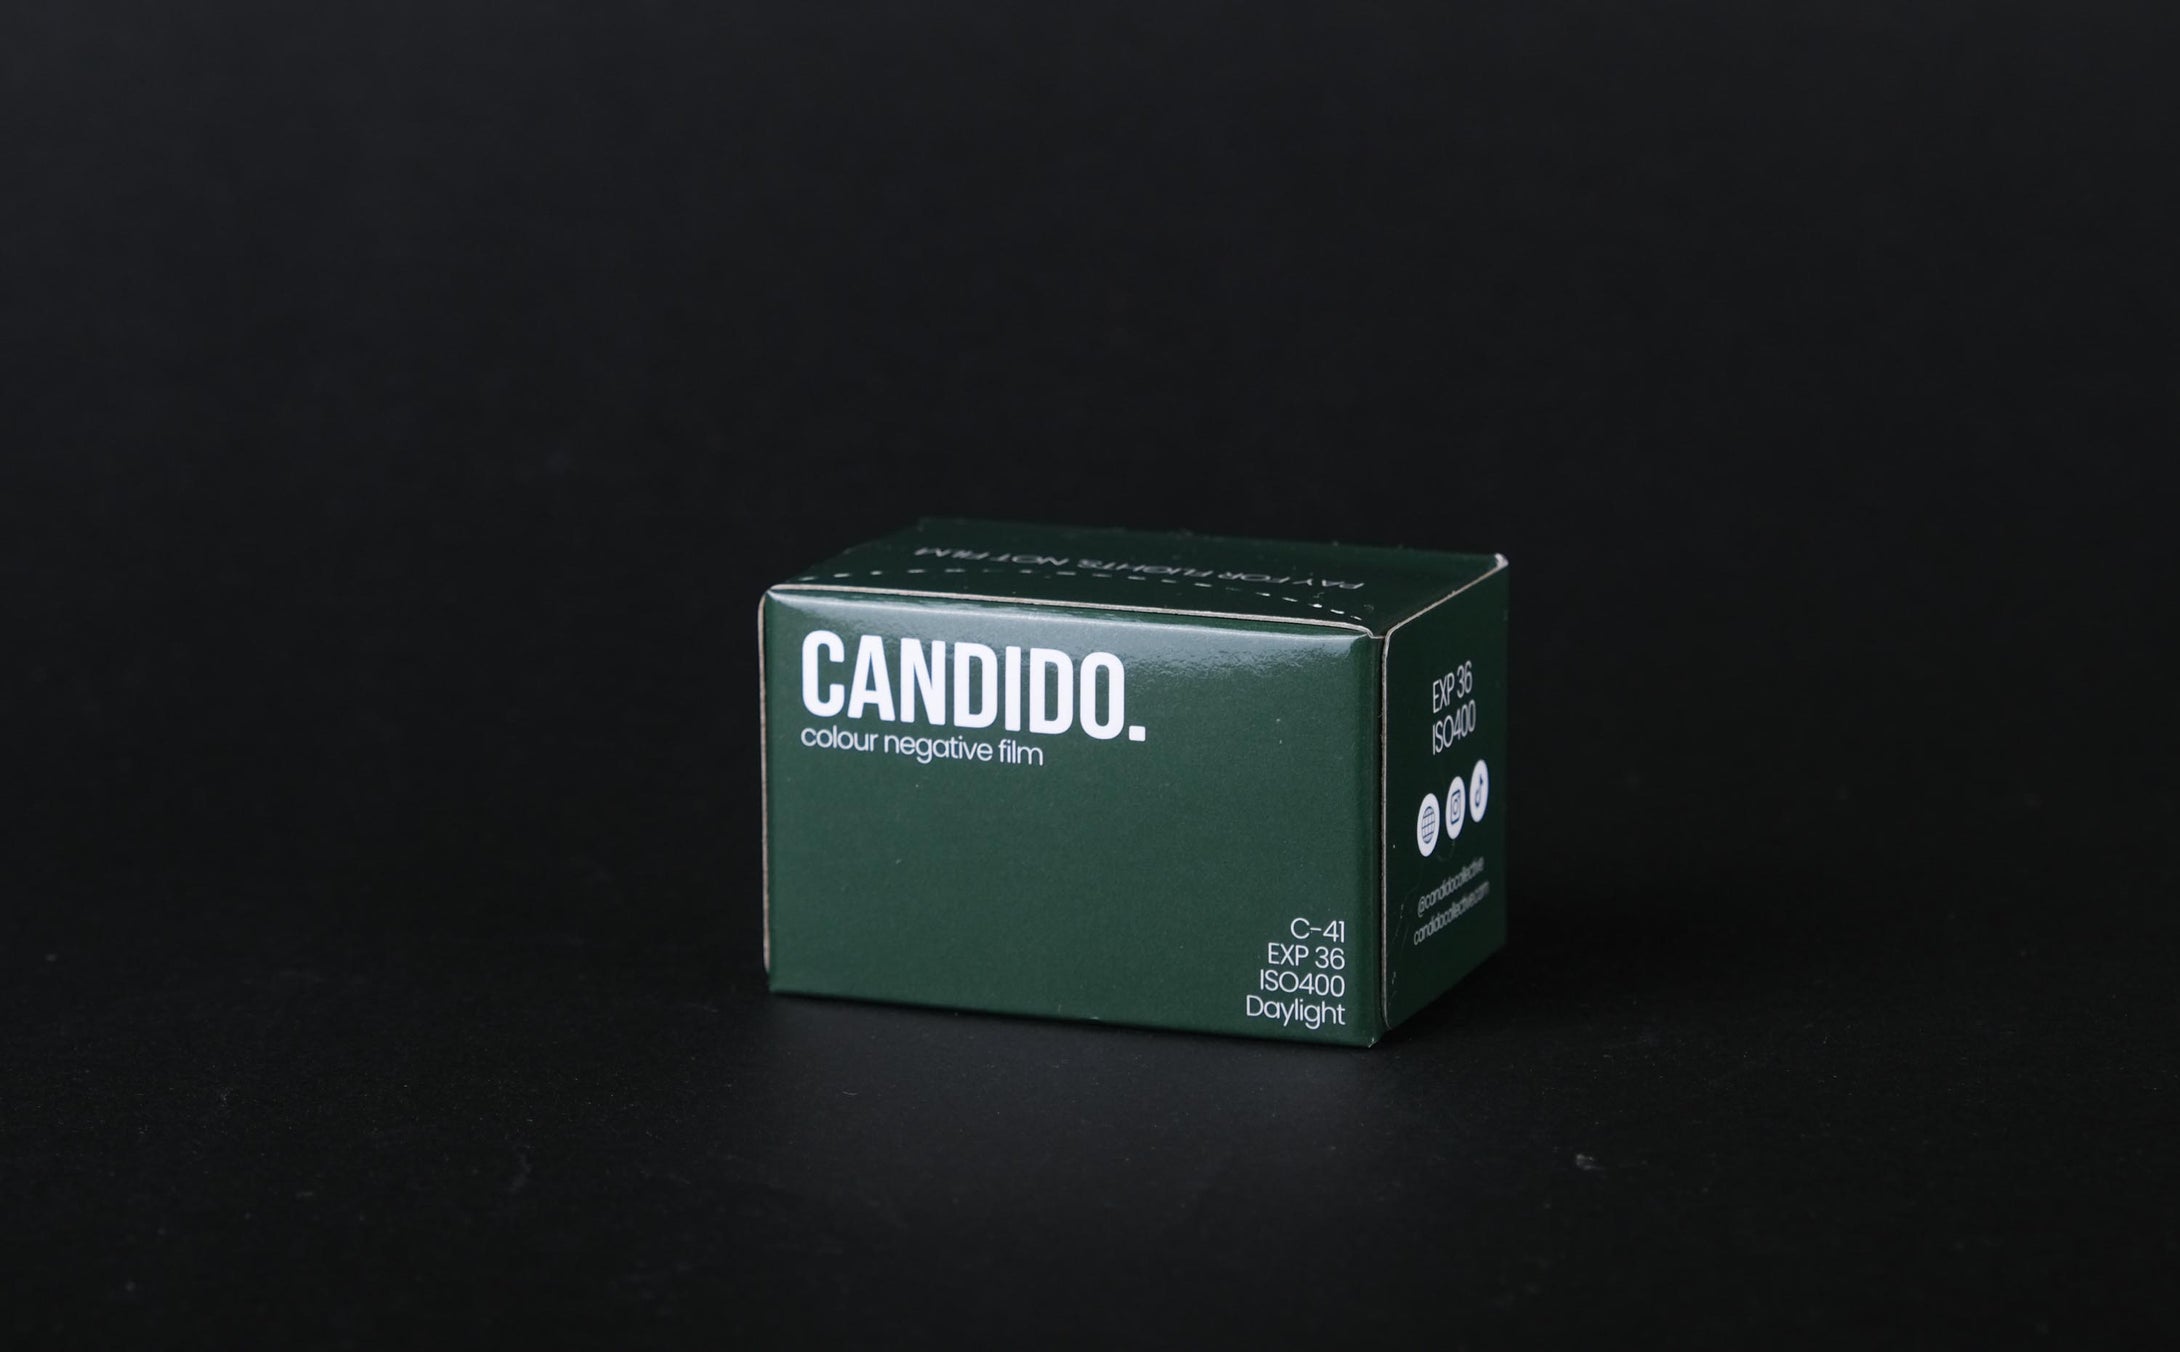 CANDIDO 400 35MM COLOUR FILM